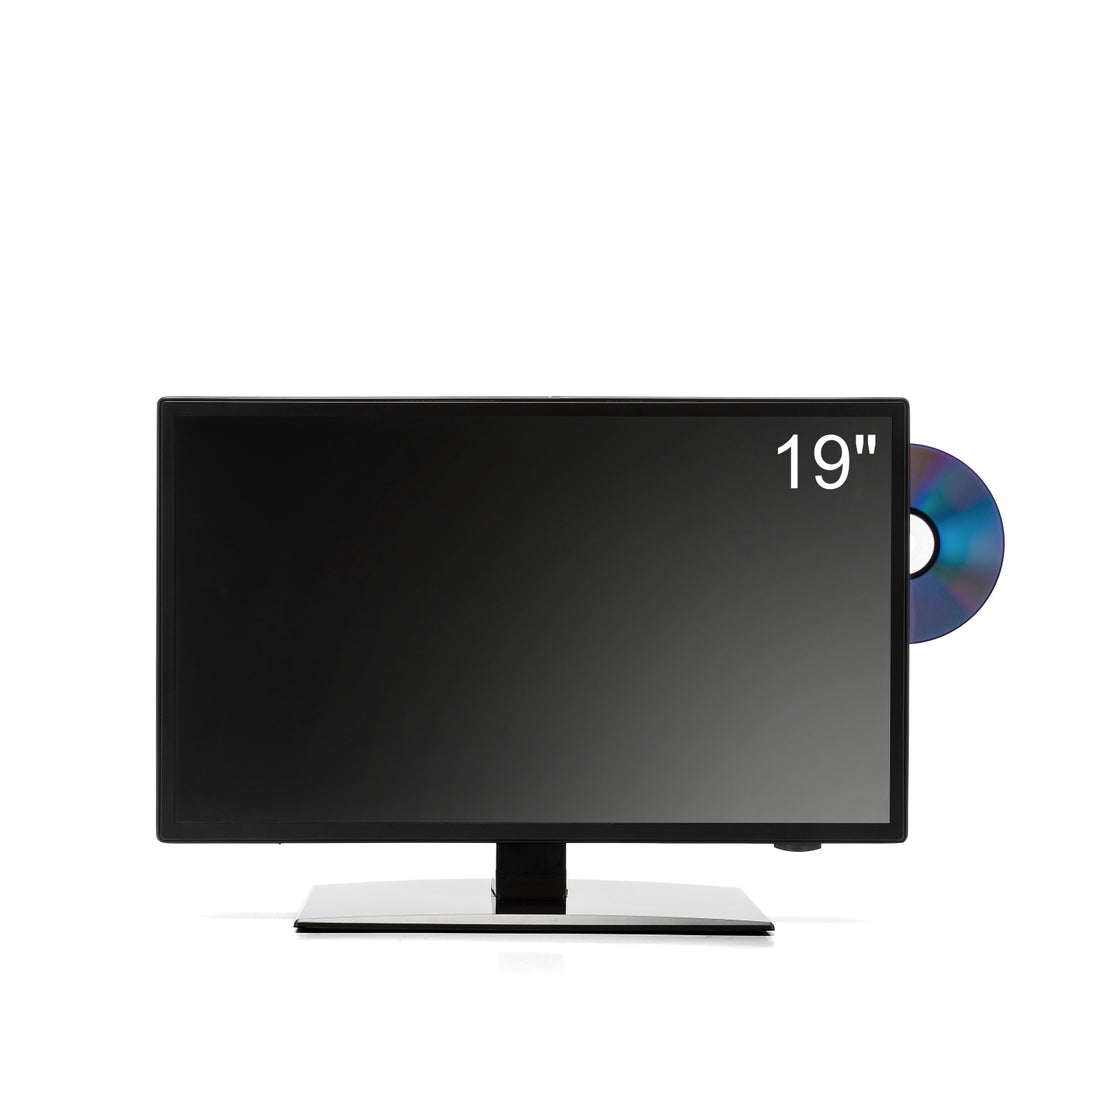 TV190+ TV con DVD 19’’ ULTRA SLIM